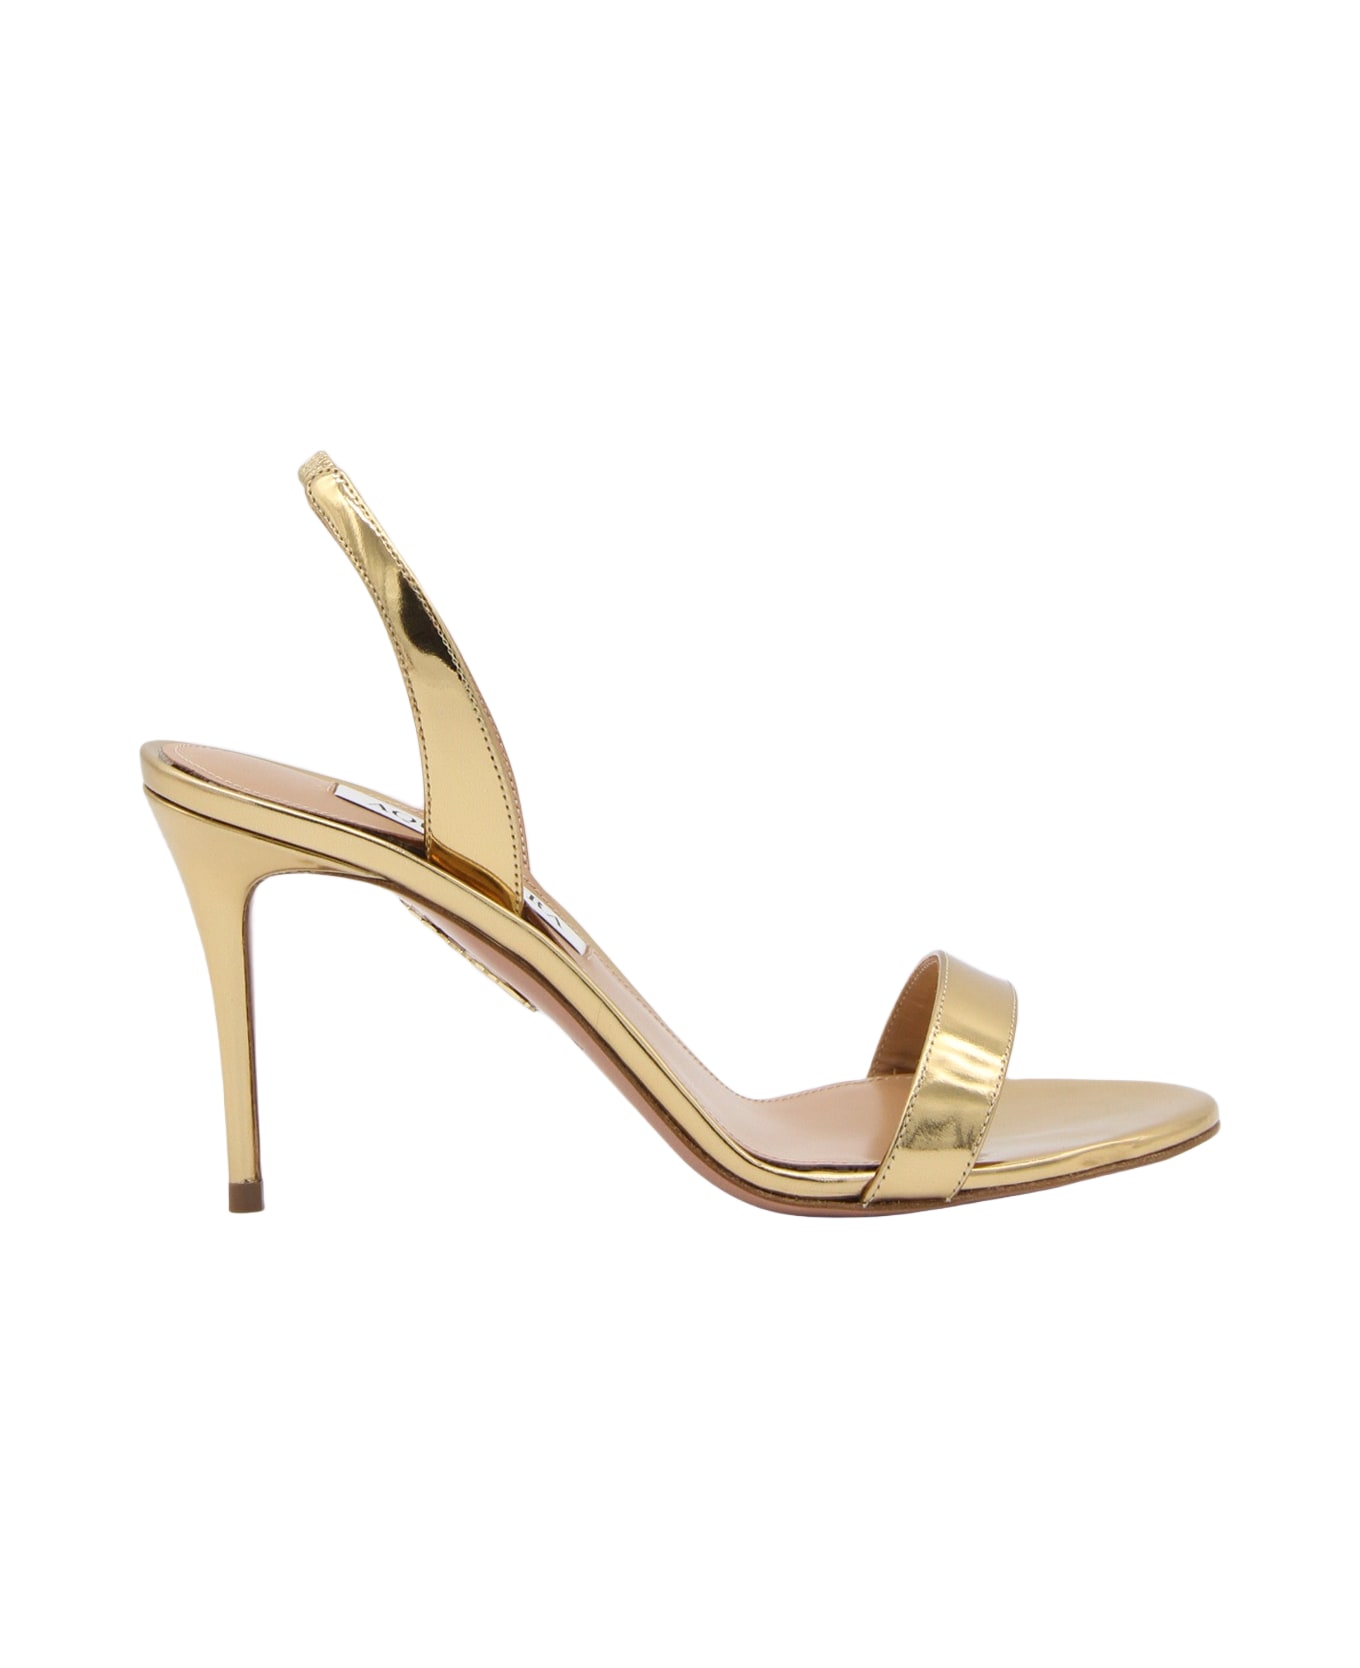 Aquazzura Gold-tone Leather Sandals - SOFT GOLD